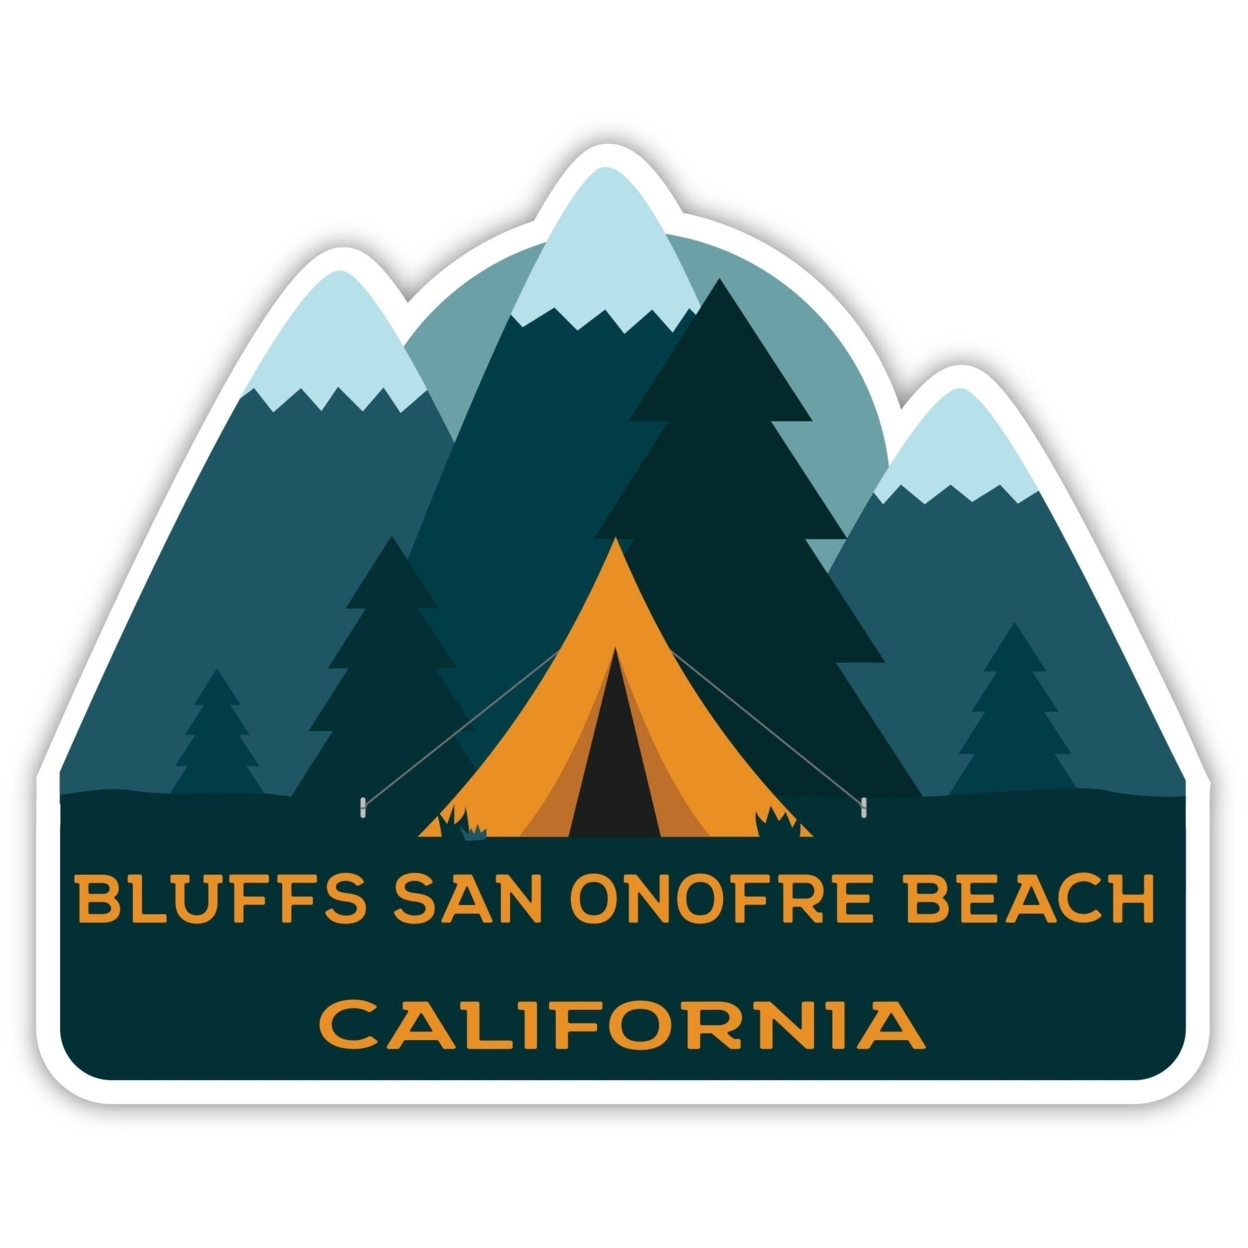 Bluffs San Onofre Beach California Souvenir Decorative Stickers (Choose Theme And Size) - Single Unit, 2-Inch, Adventures Awaits